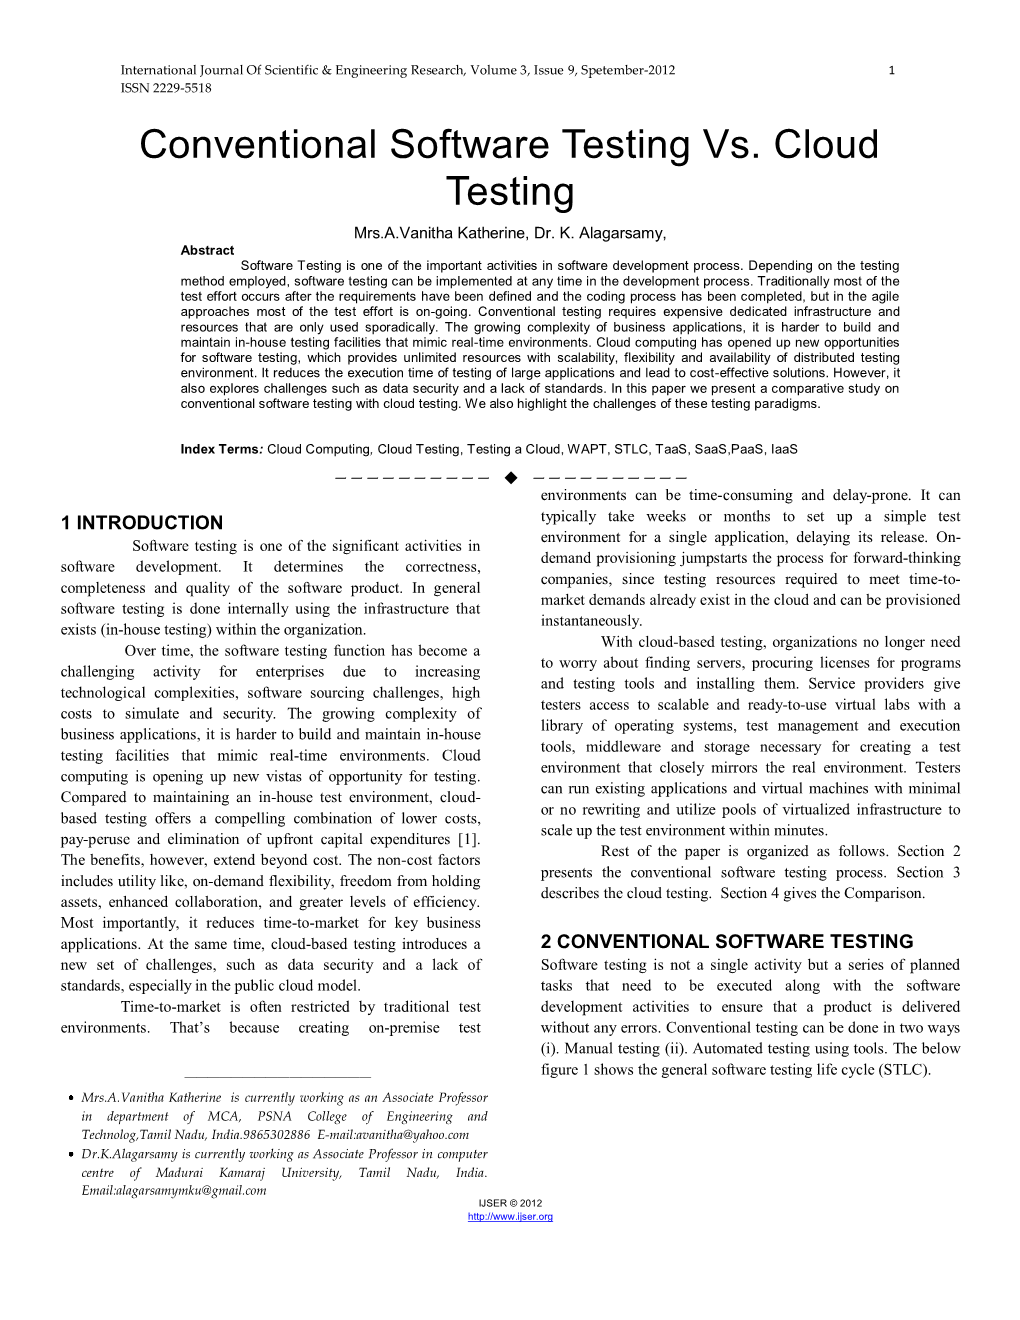 Conventional Software Testing Vs. Cloud Testing Mrs.A.Vanitha Katherine, Dr